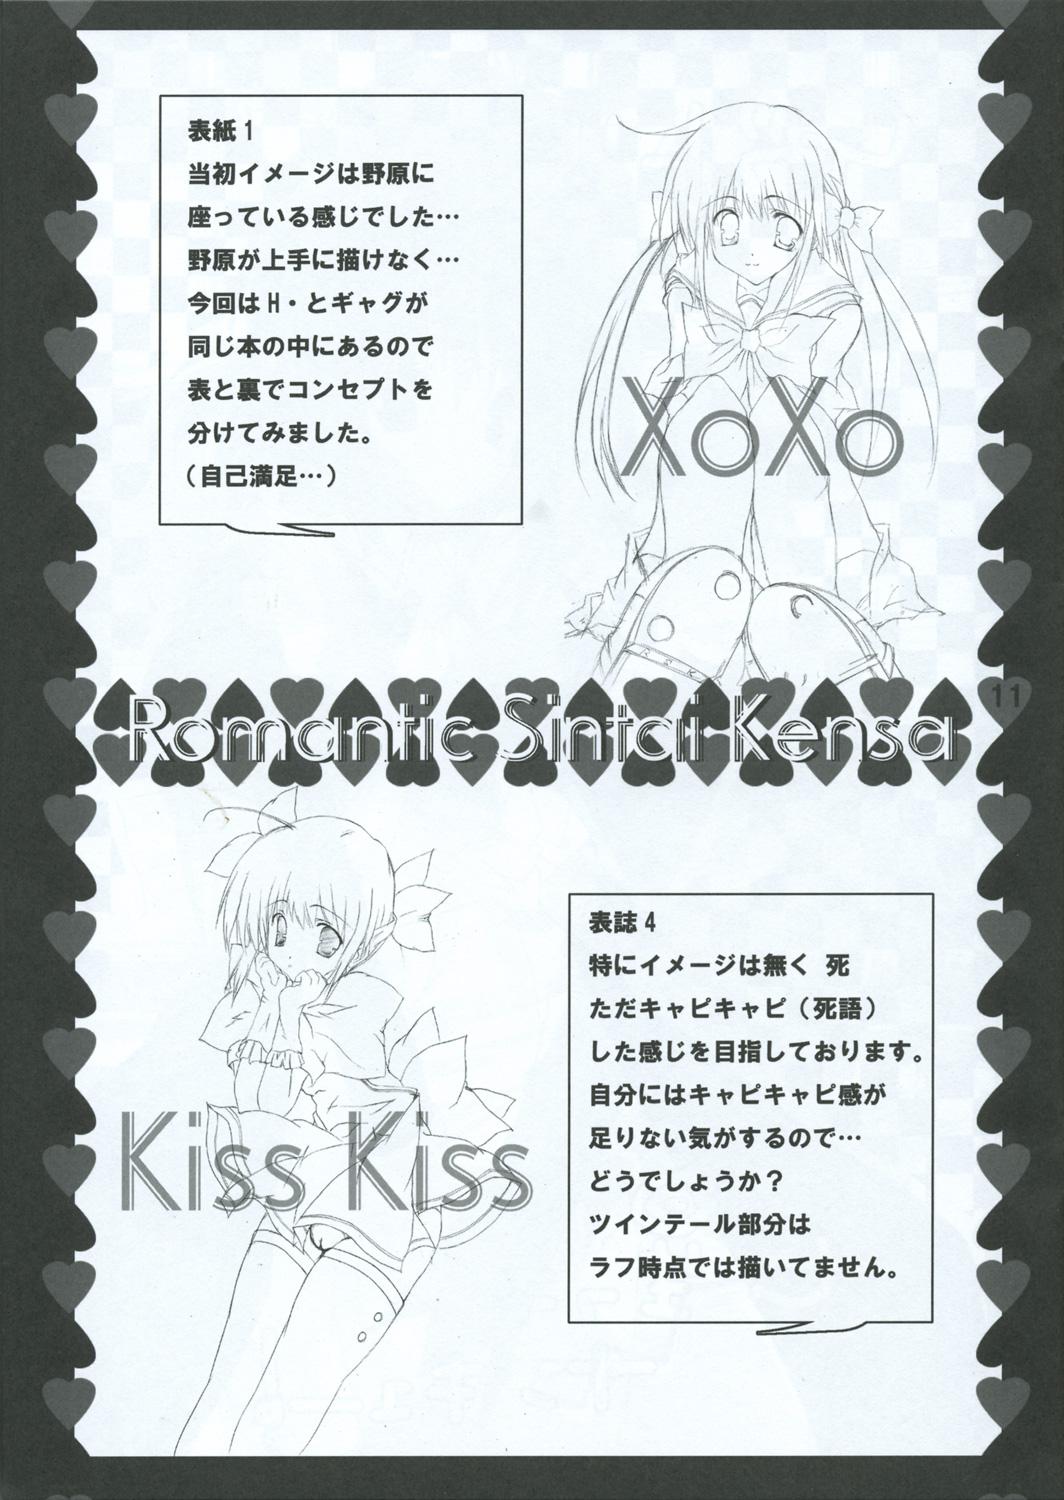 XoXo/kiss kiss 10